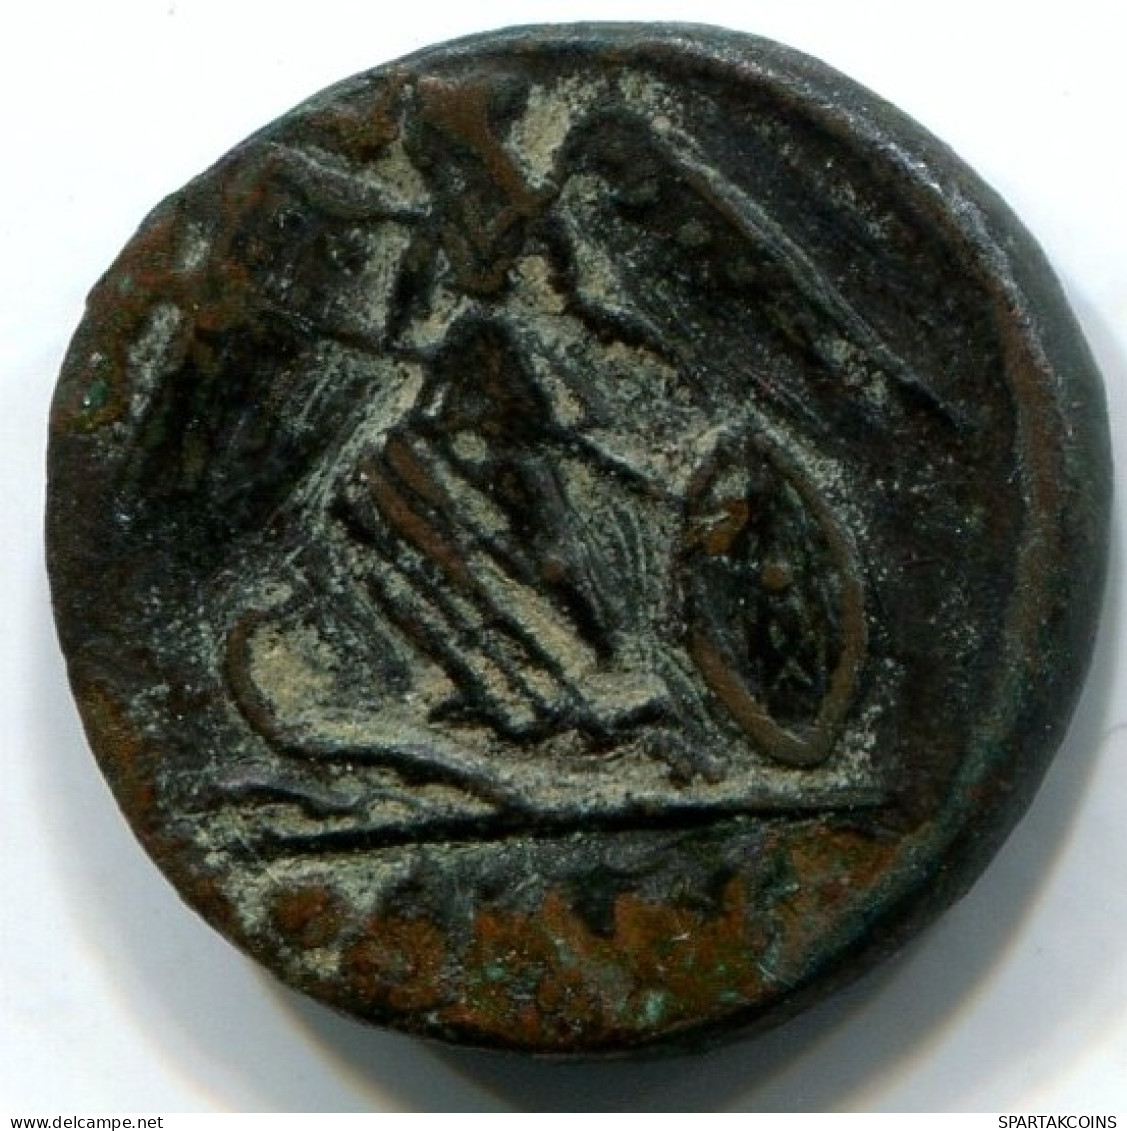 CONSTANTINE I AE SMALL FOLLIS Antike RÖMISCHEN KAISERZEIT Münze #ANC12364.6.D.A - El Imperio Christiano (307 / 363)